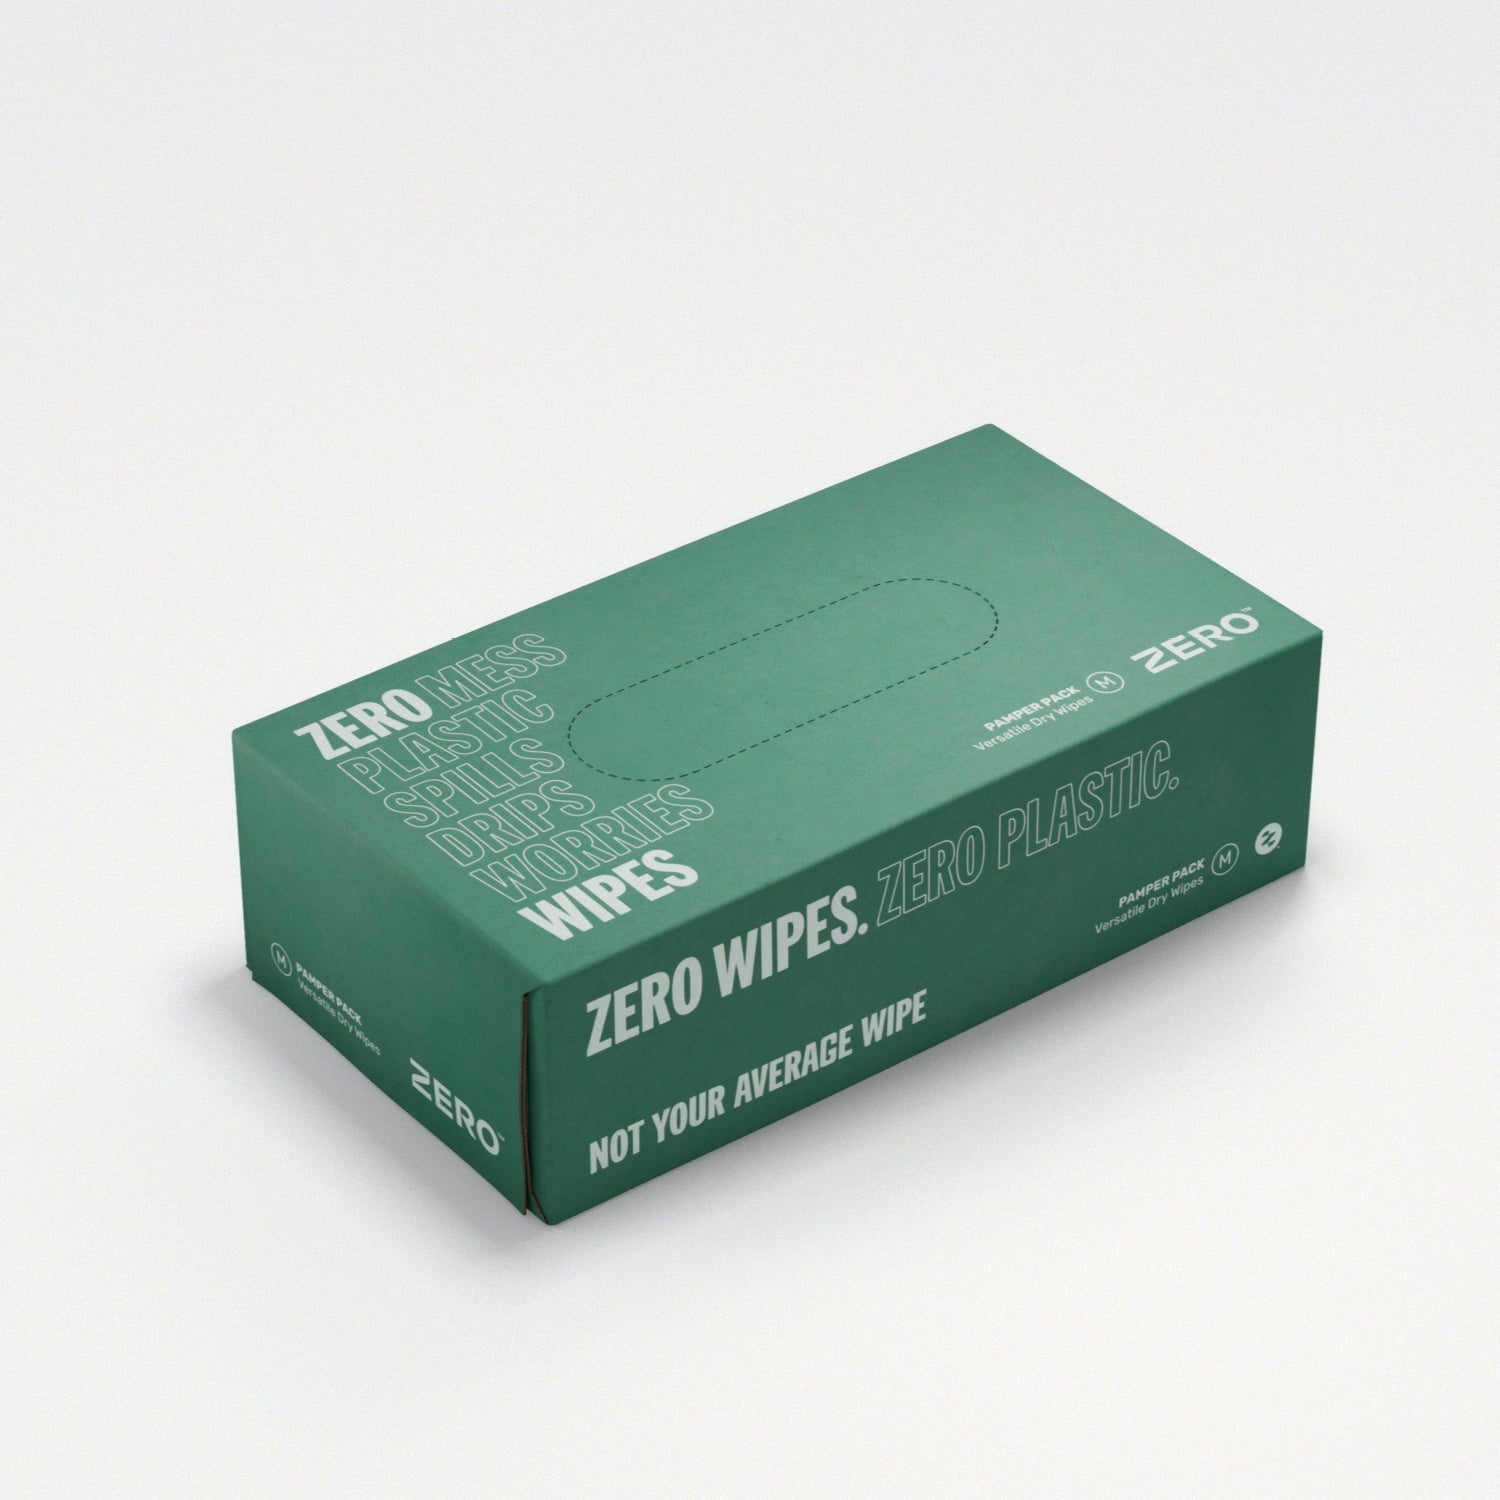 ZERO plastic free wipes pamper medium box green